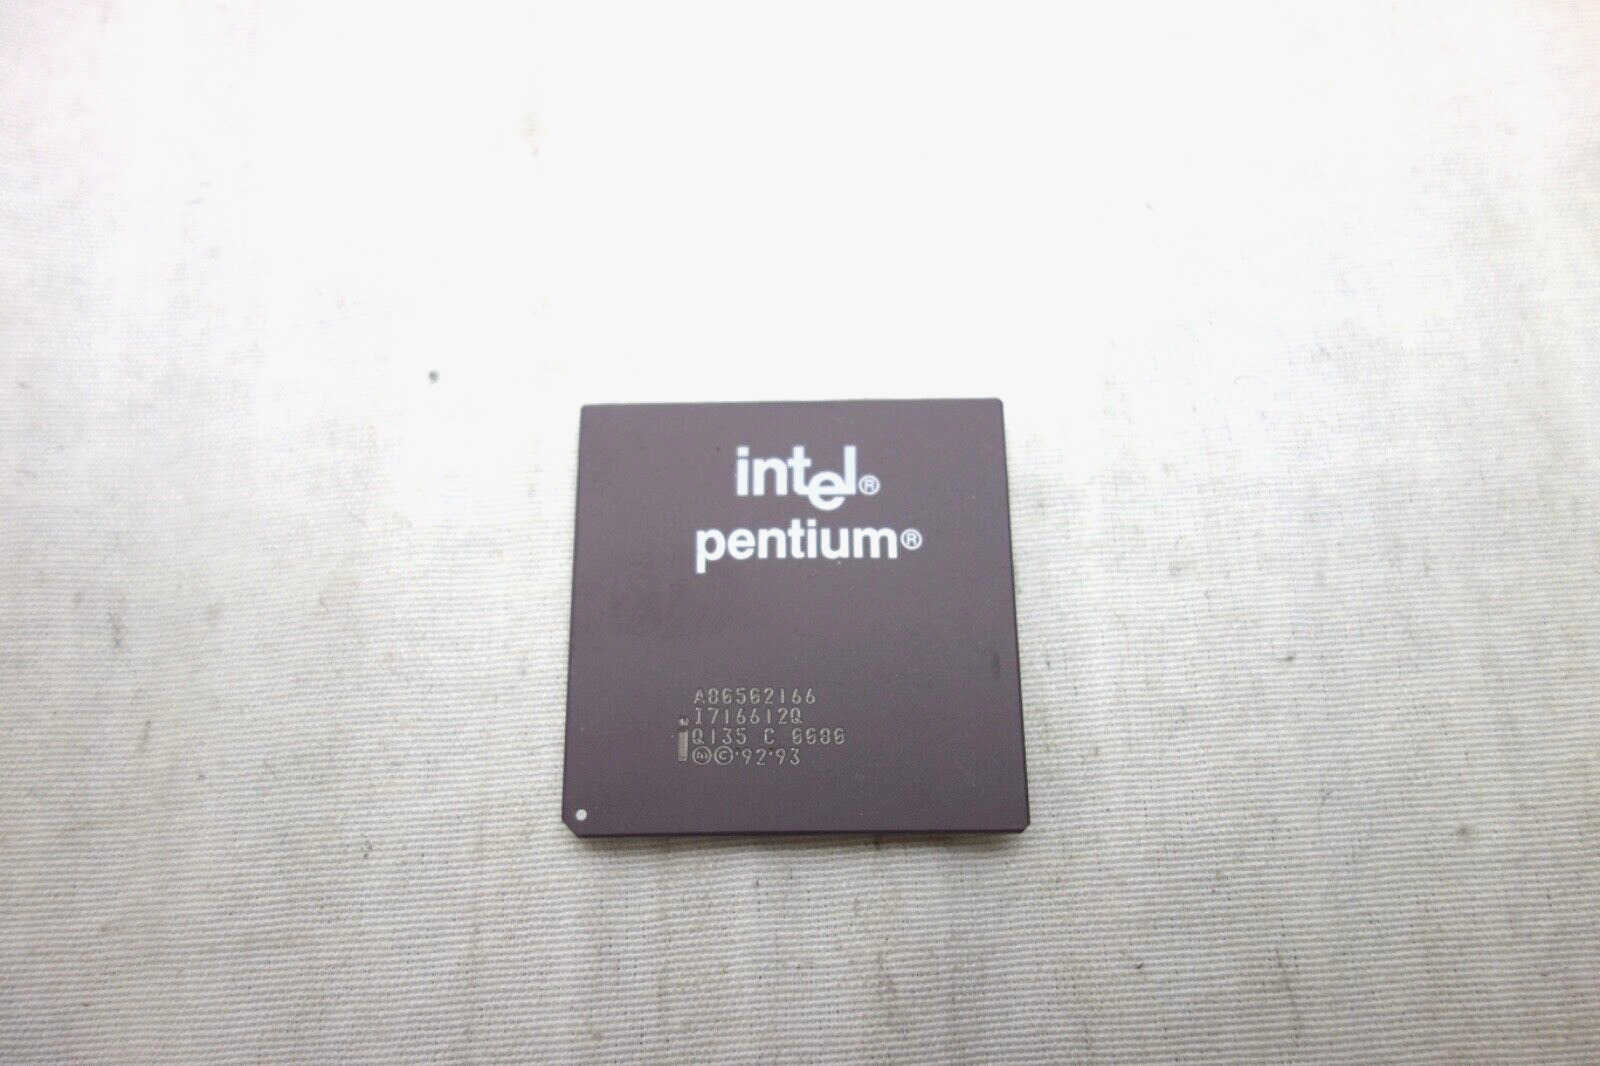 Intel Pentium A80502-166 Vintage CPU | UNTESTED - READ DESCRIPTION